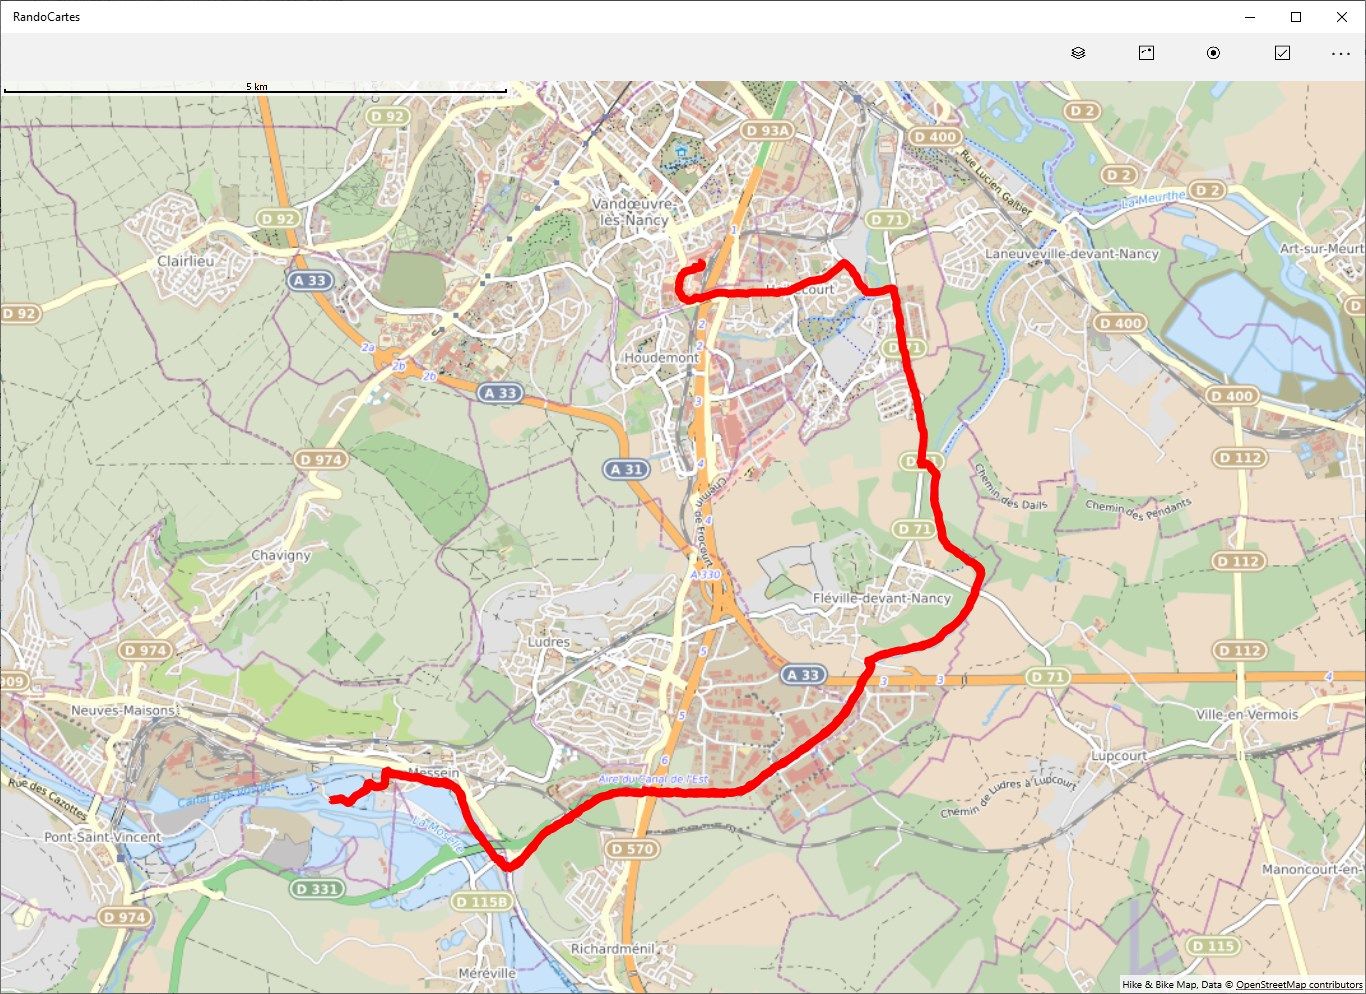 Hike & Bike map with trail shown.